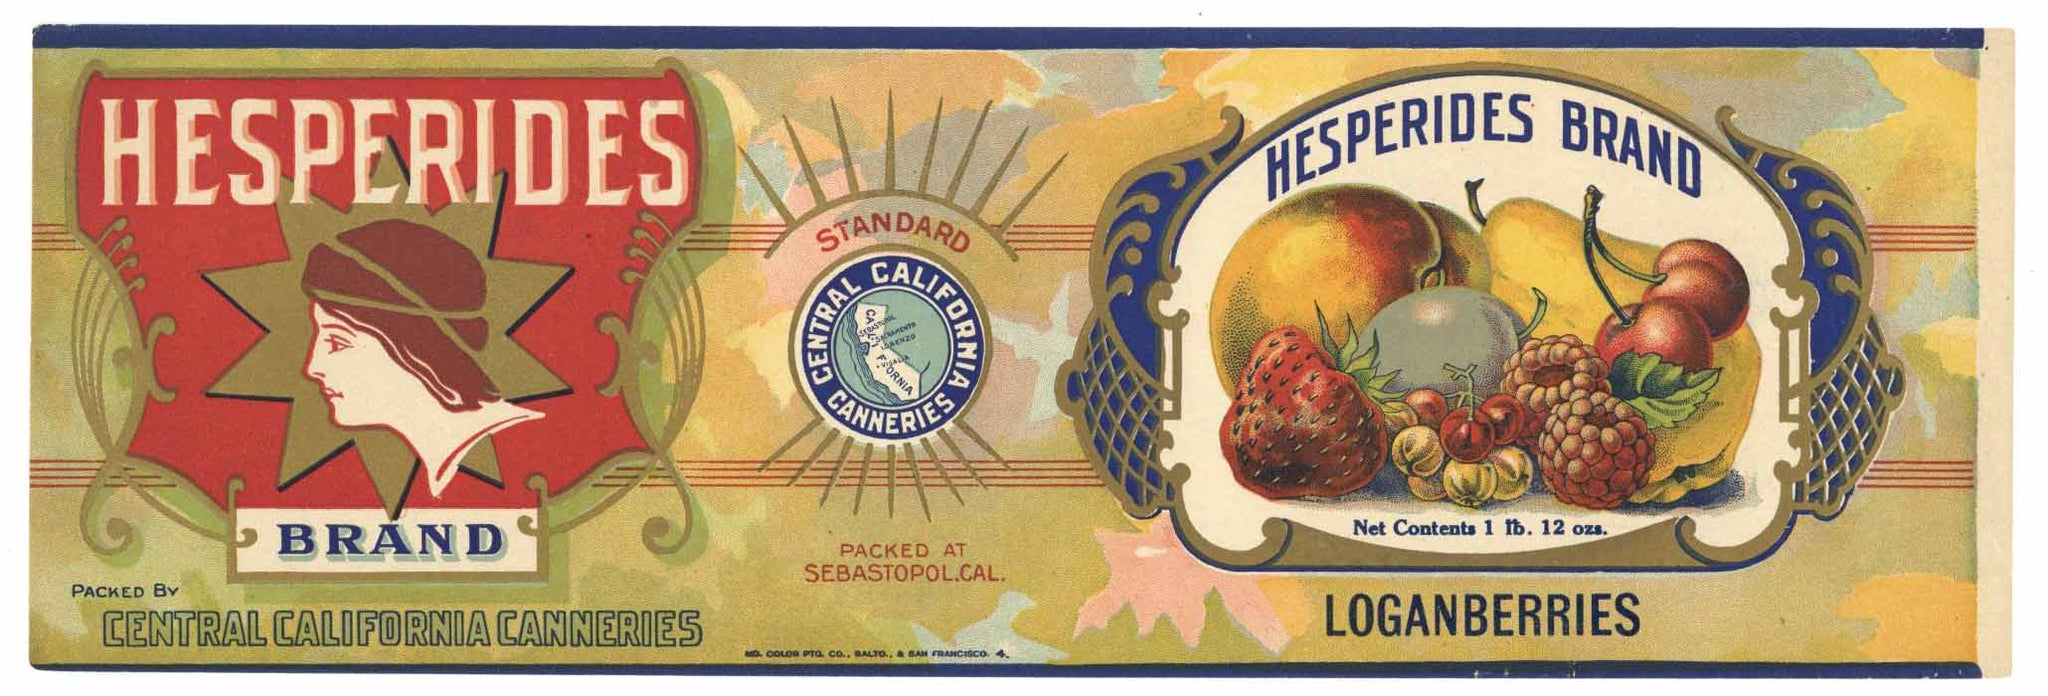 Hesperides Brand Vintage Loganberries Can Label